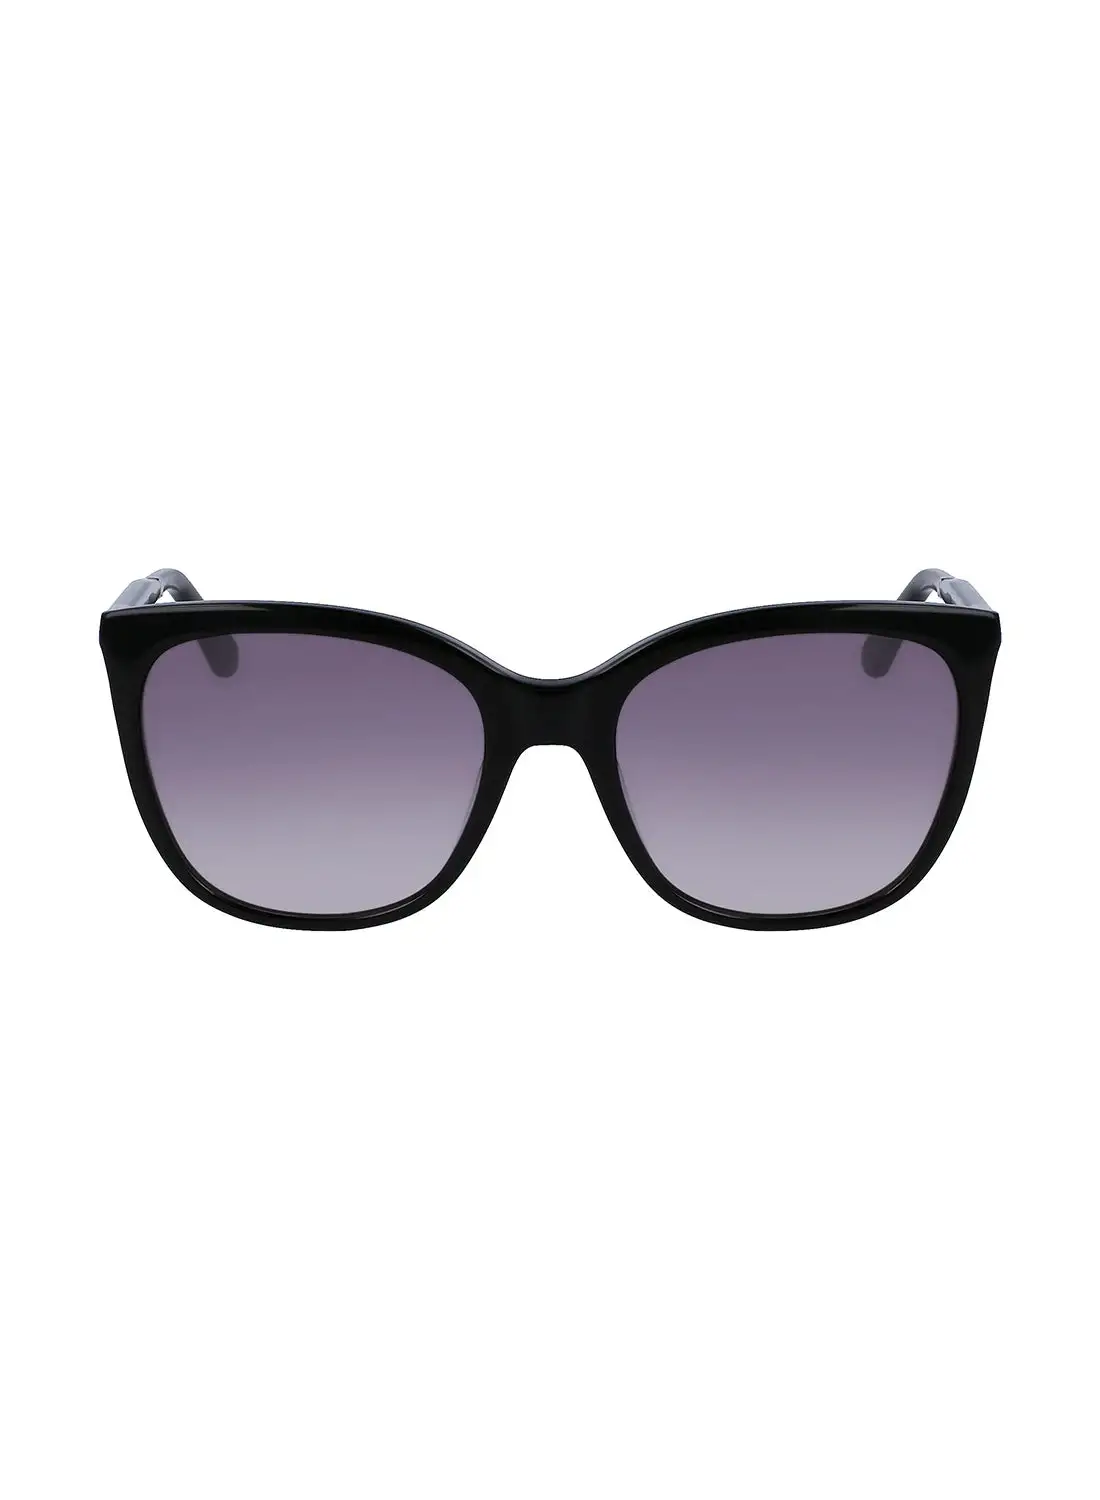 CALVIN KLEIN Women's Rectangular Sunglasses - CK23500S-001-5519 - Lens Size: 55 Mm